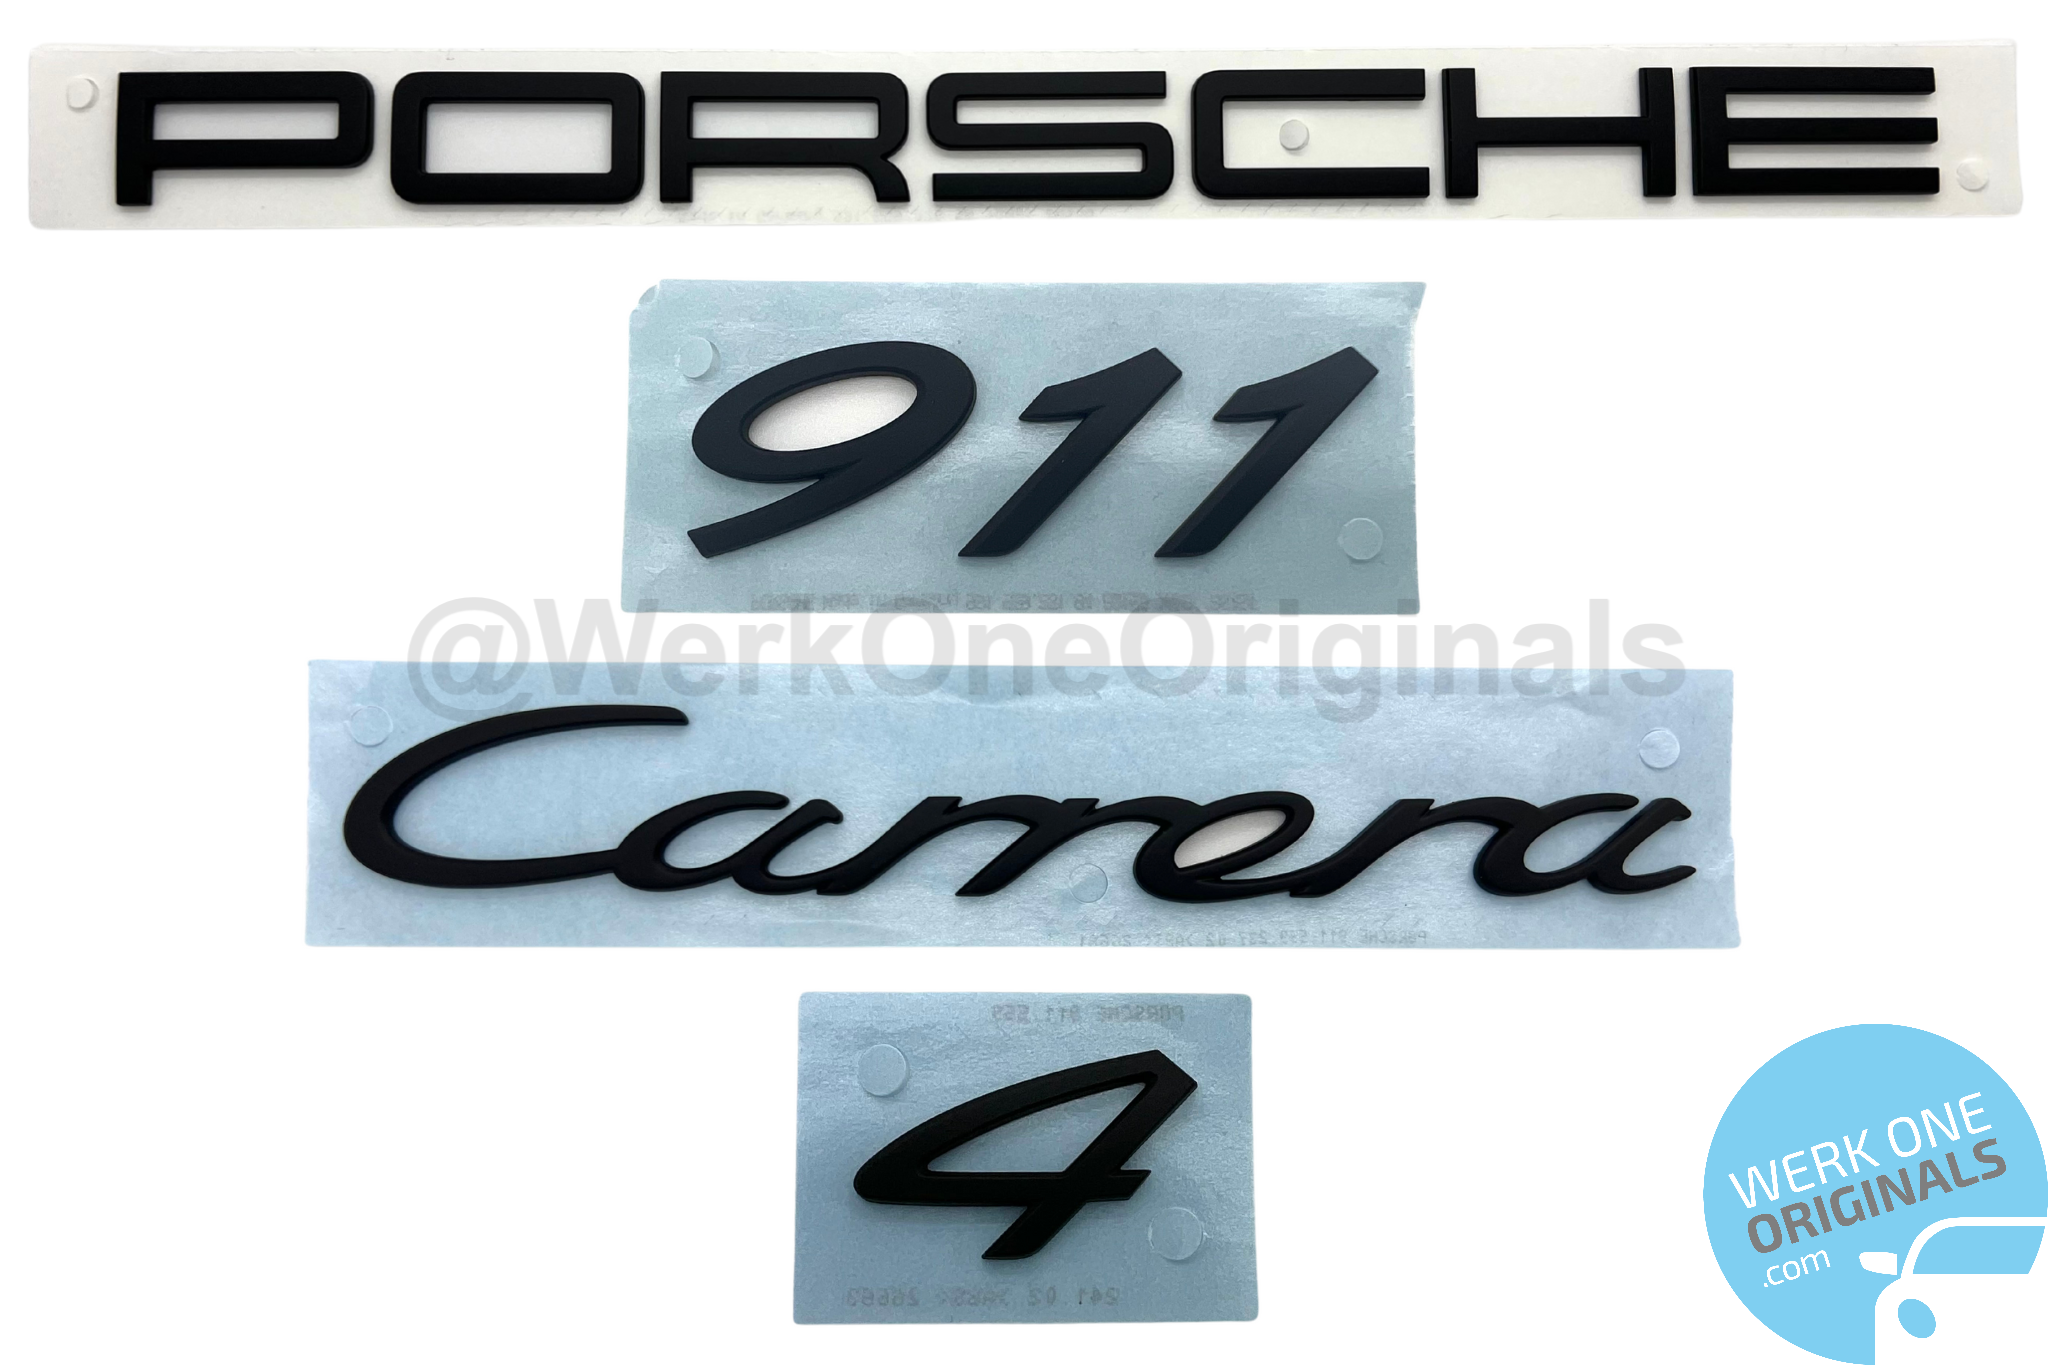 Official 'Porsche 911 Carrera 4' Rear Badge Decal in Matte Black for 911 Type 991 Carrera 4 Models